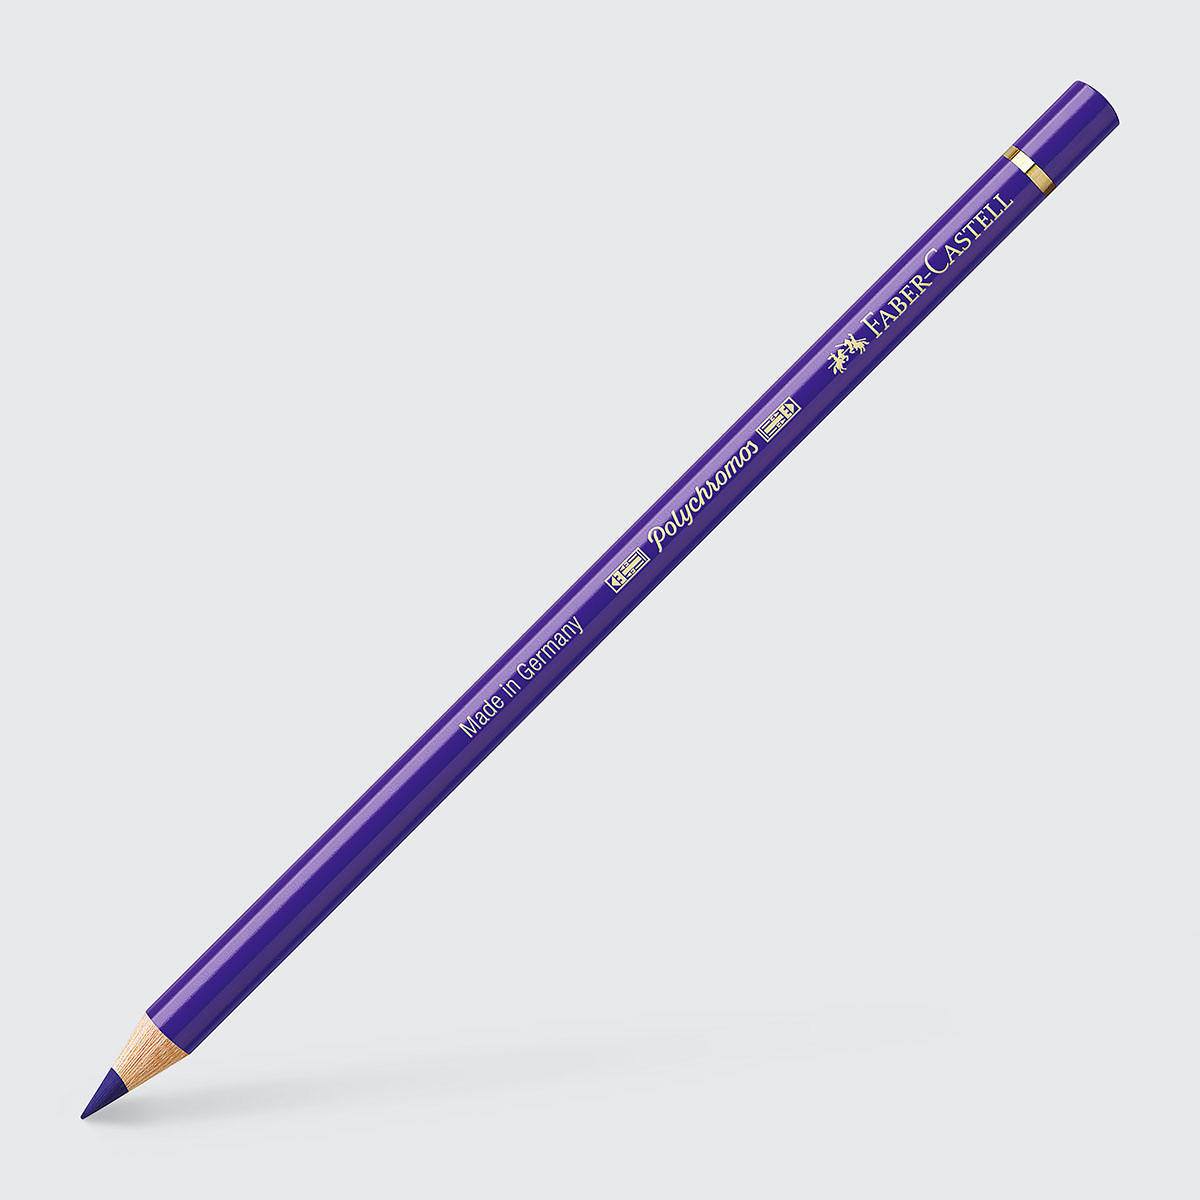 Faber-Castell Polychromos Artists’ Coloured Pencil One Size Blue Violet (137)